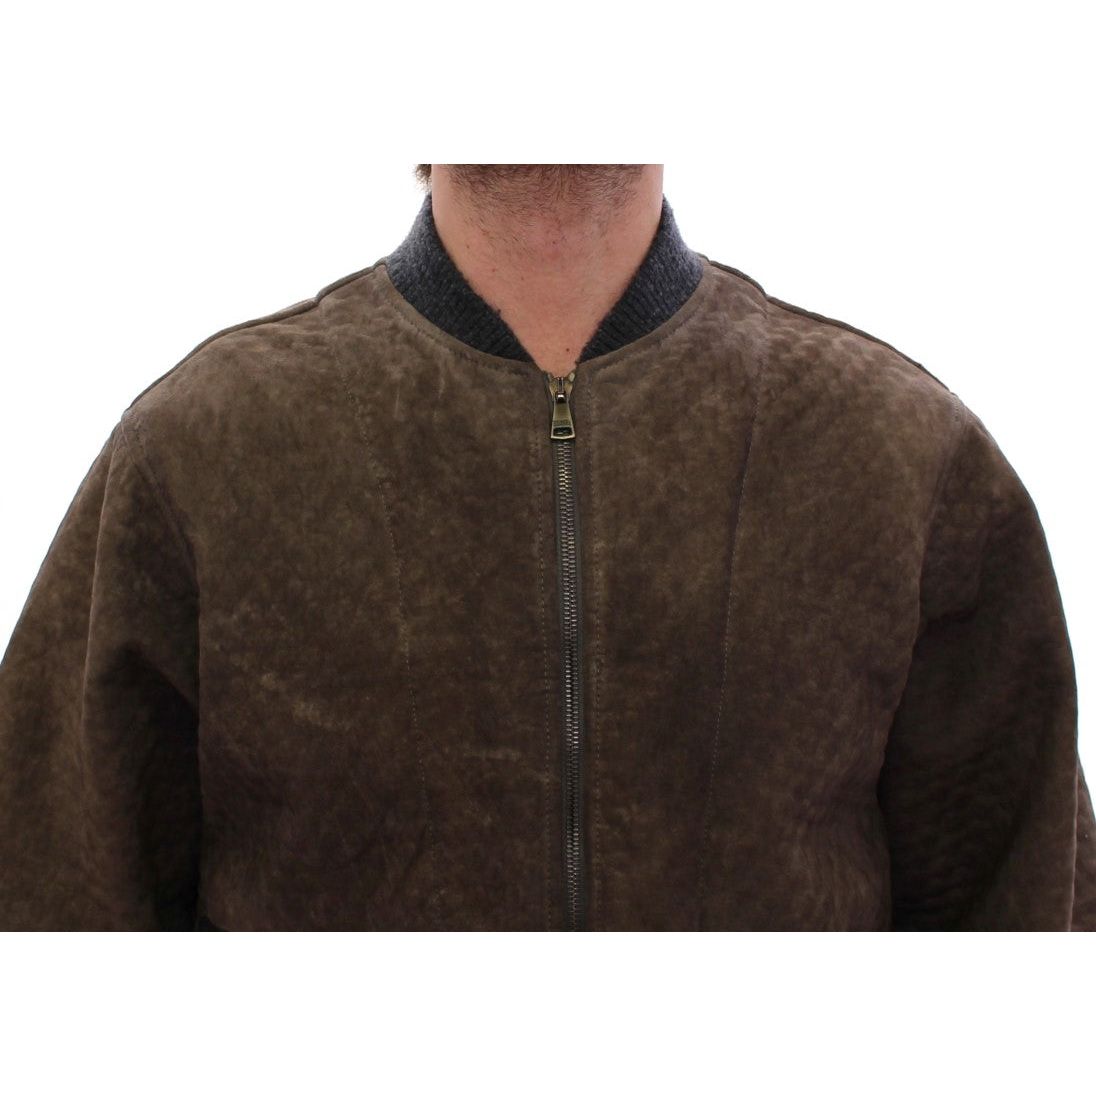 Dolce & Gabbana Elegant Leather & Wool Blend Jacket Coats & Jackets brown-gray-leather-jacket-coat 54860-brown-gray-leather-jacket-coat-3.jpg